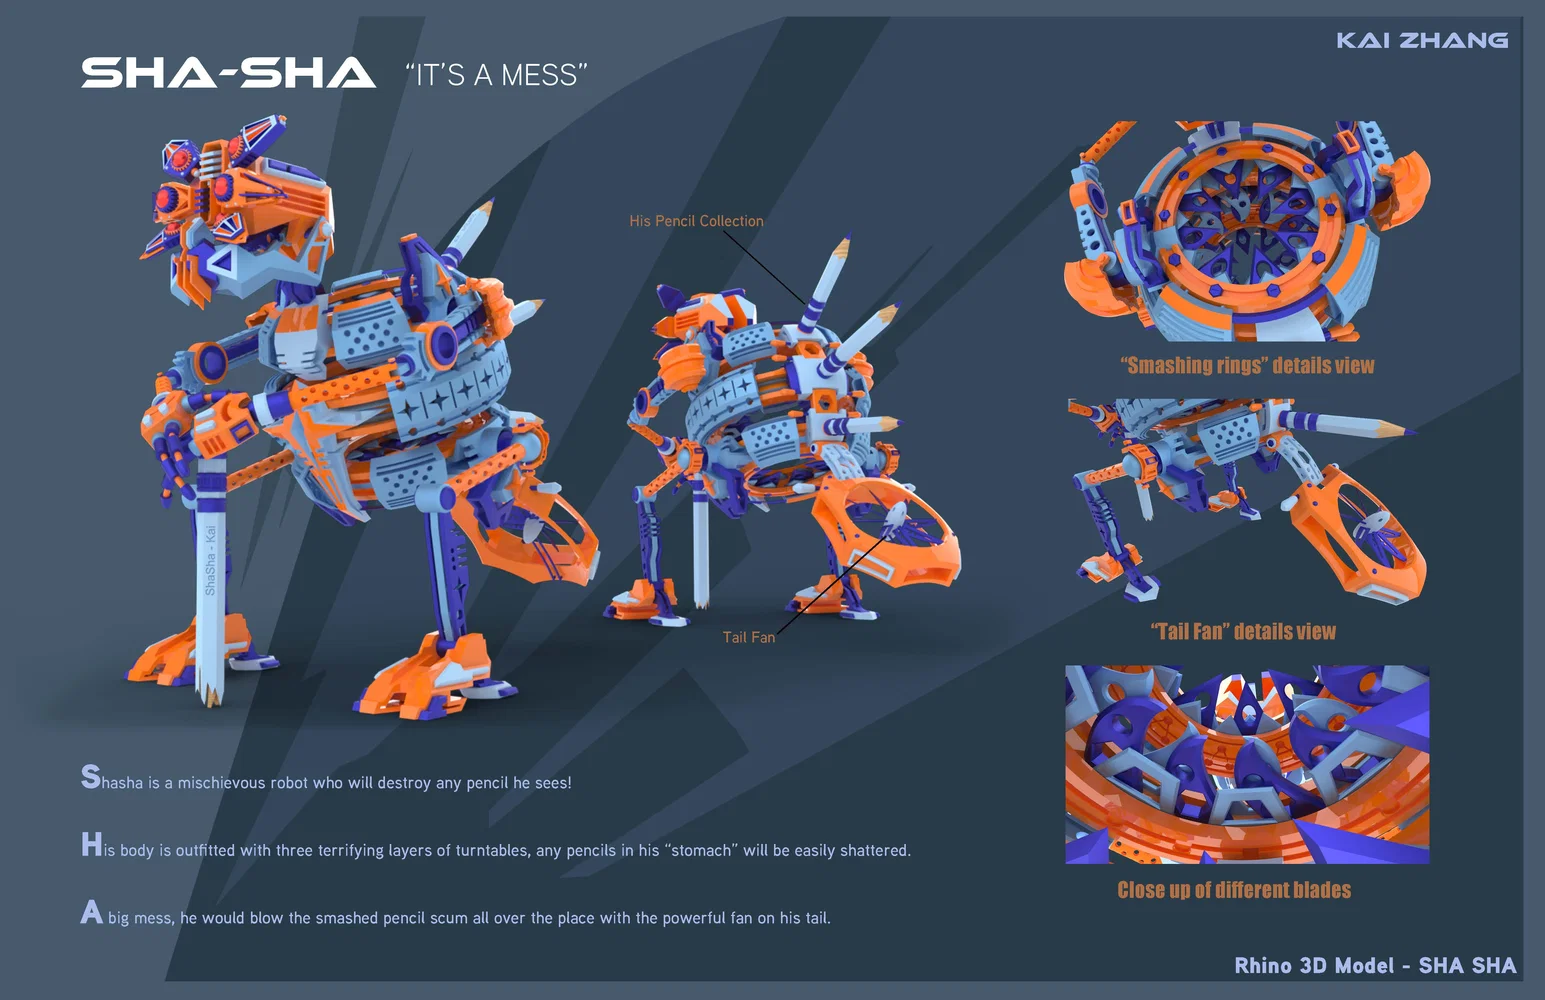 Rhino 3D Model - SHA SHA